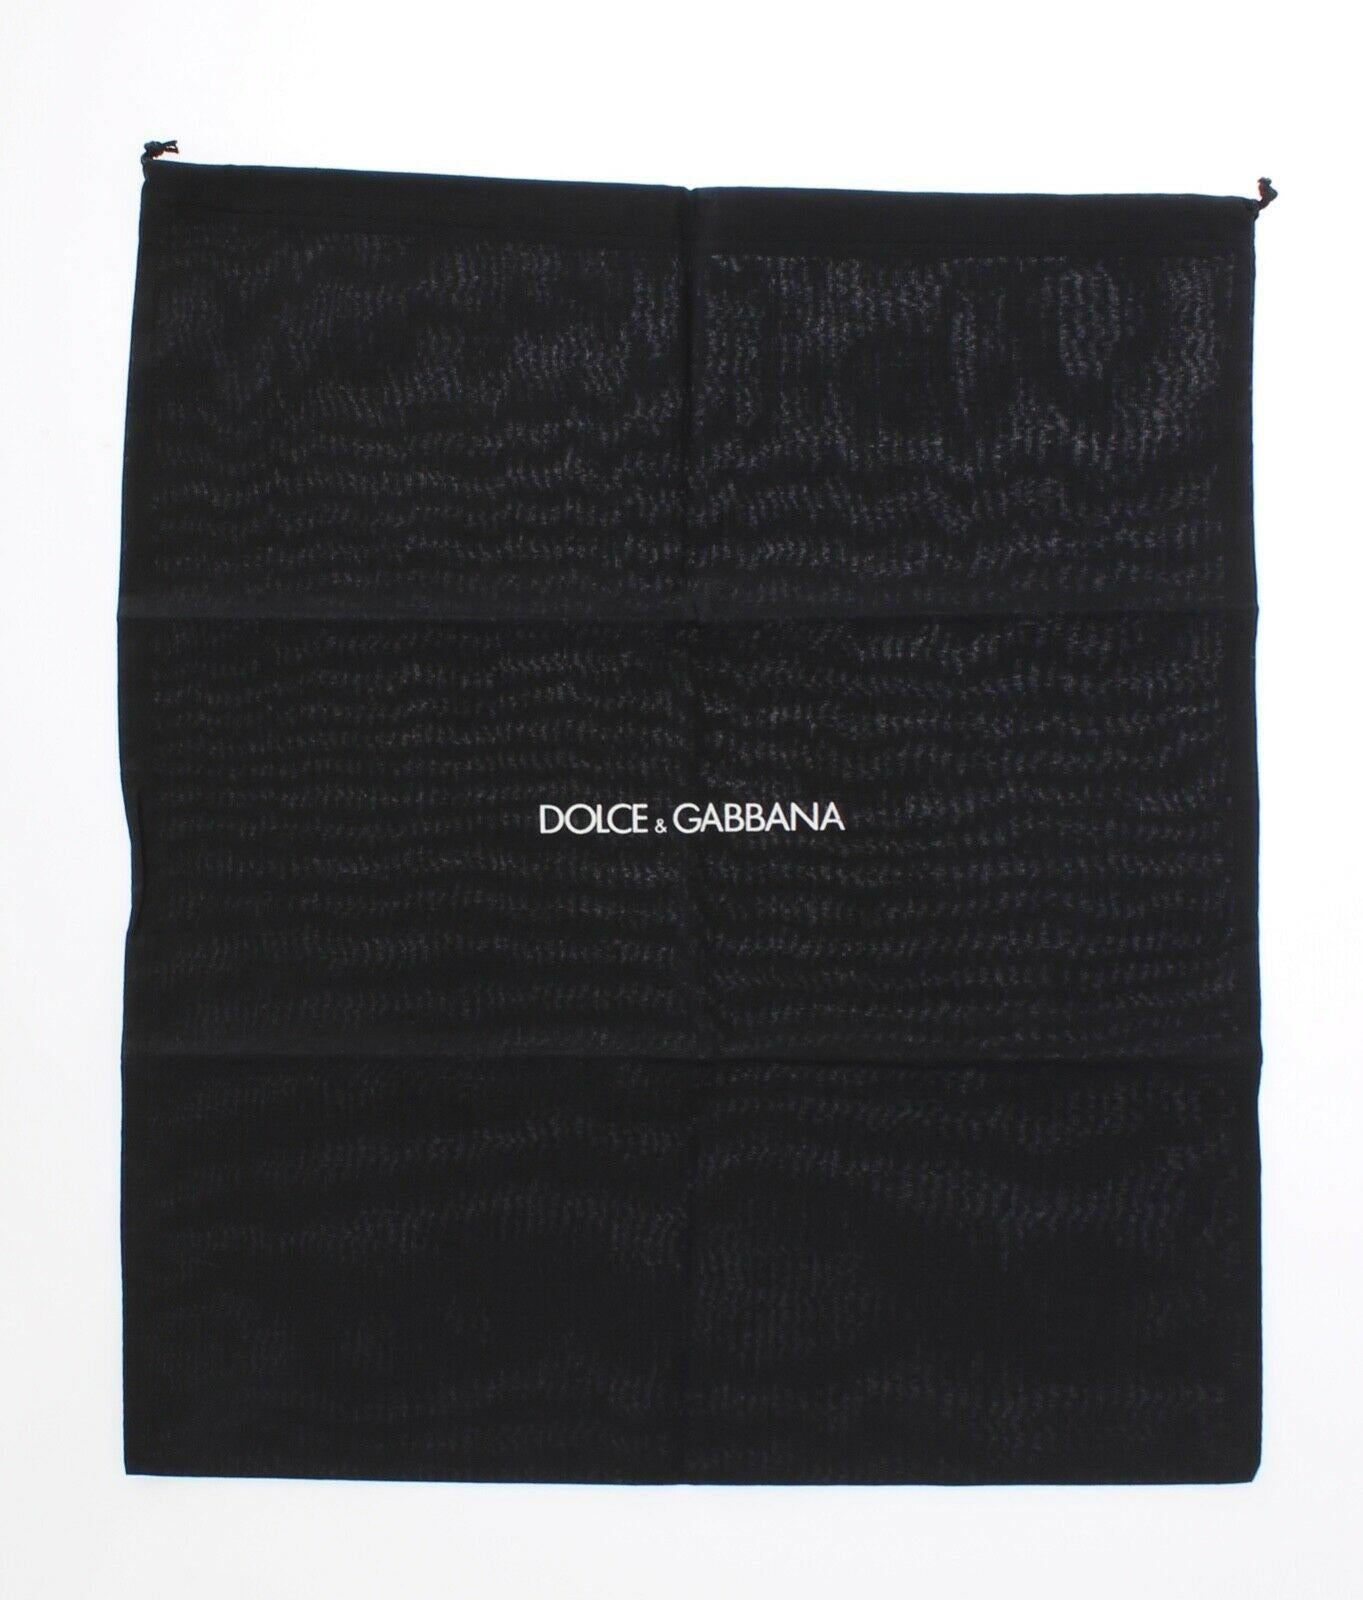 Dolce & Gabbana Black Leather Shopping Tote Bag Handbag Top Handle Bag 4